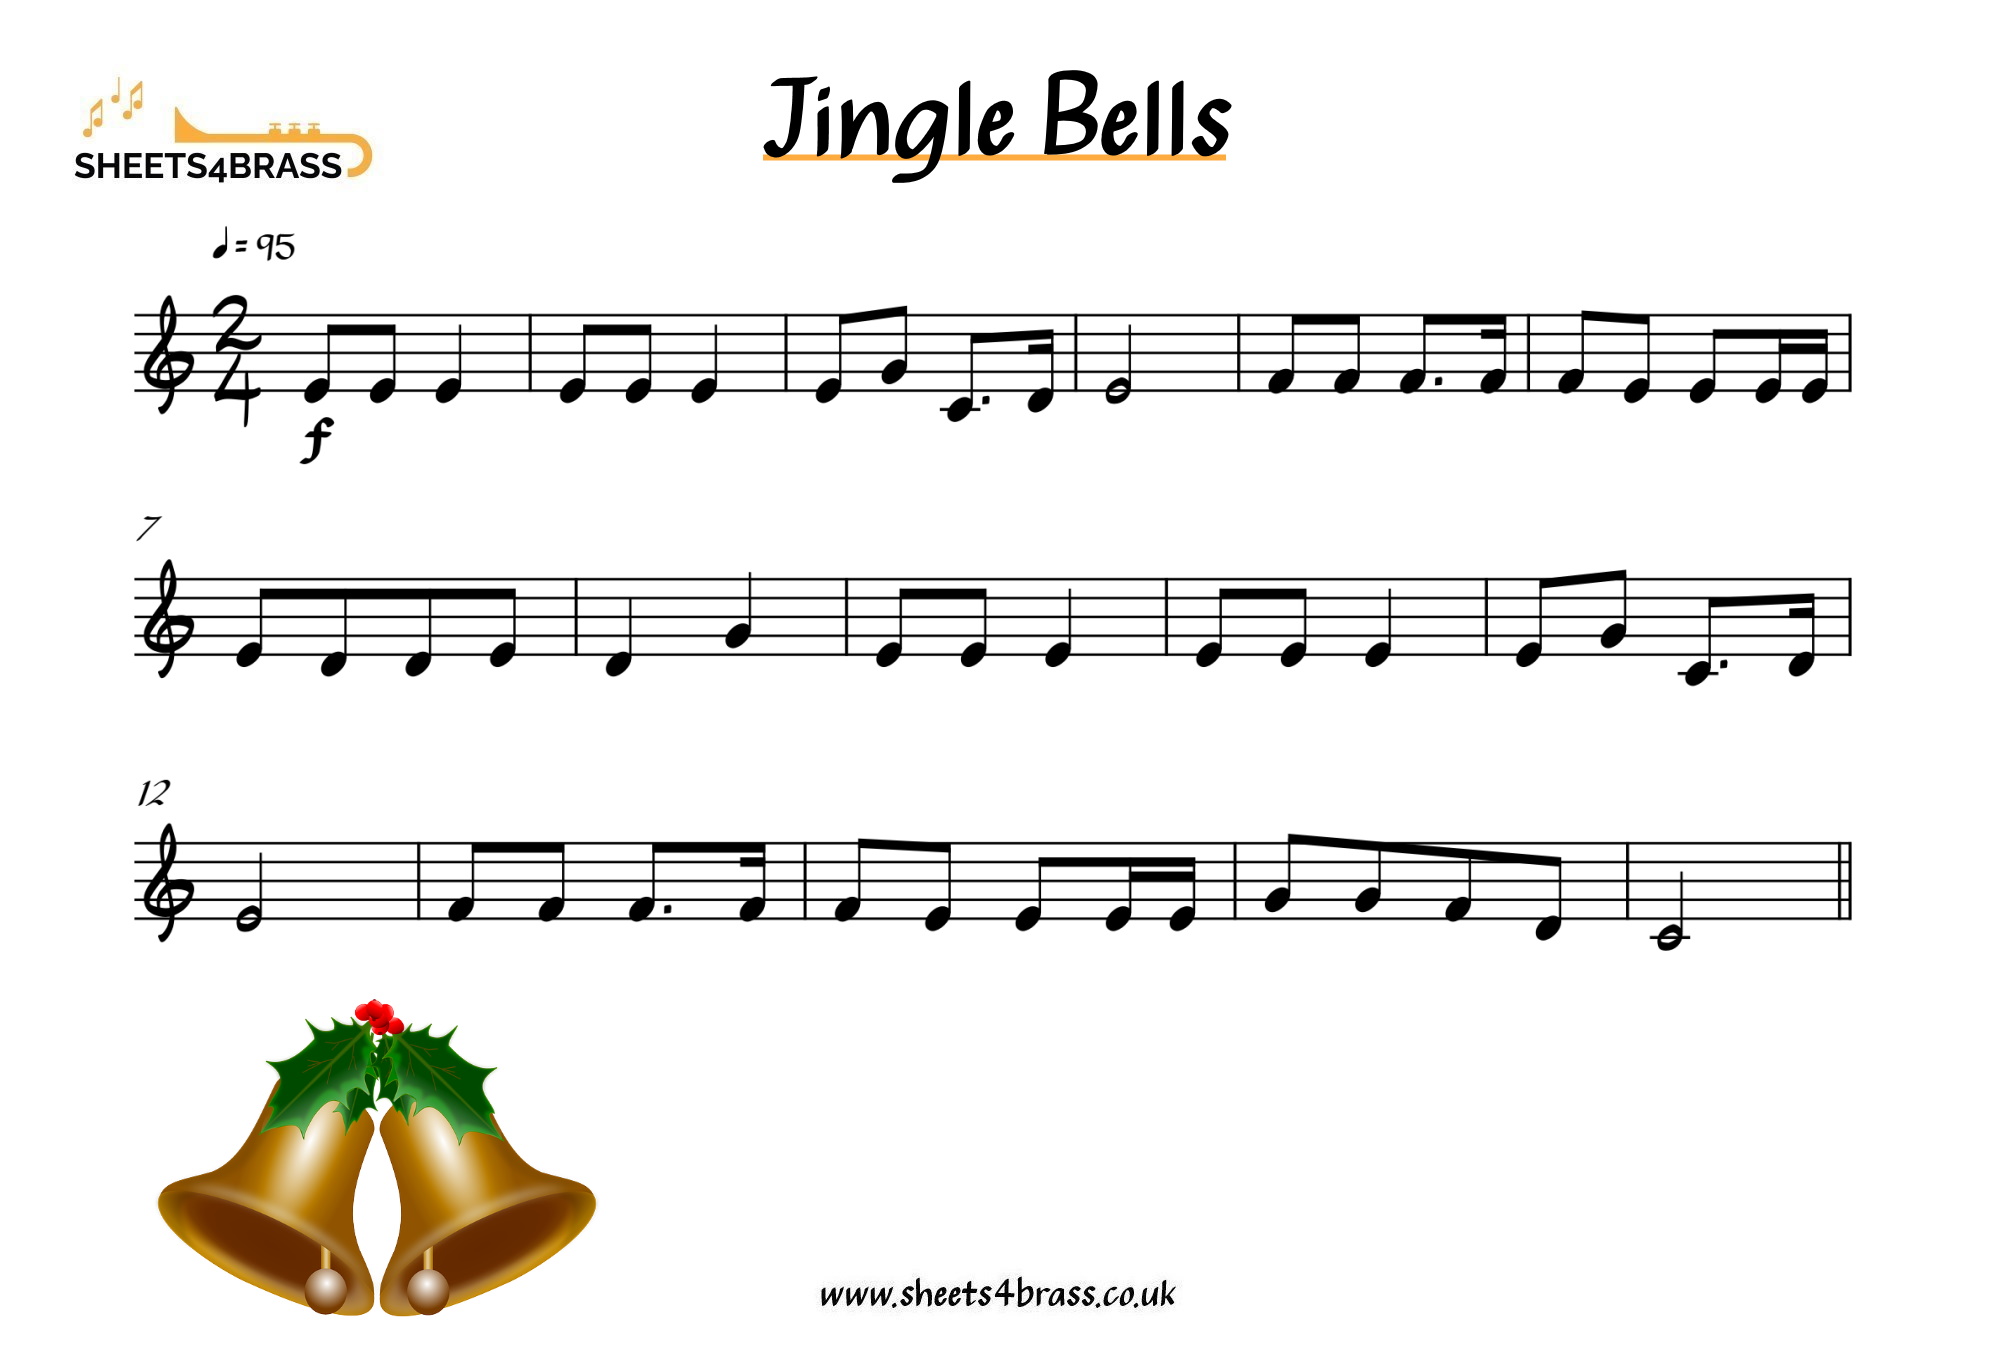 https://sheets4brass.co.uk/wp-content/uploads/2022/12/Jingle-Bells.jpg